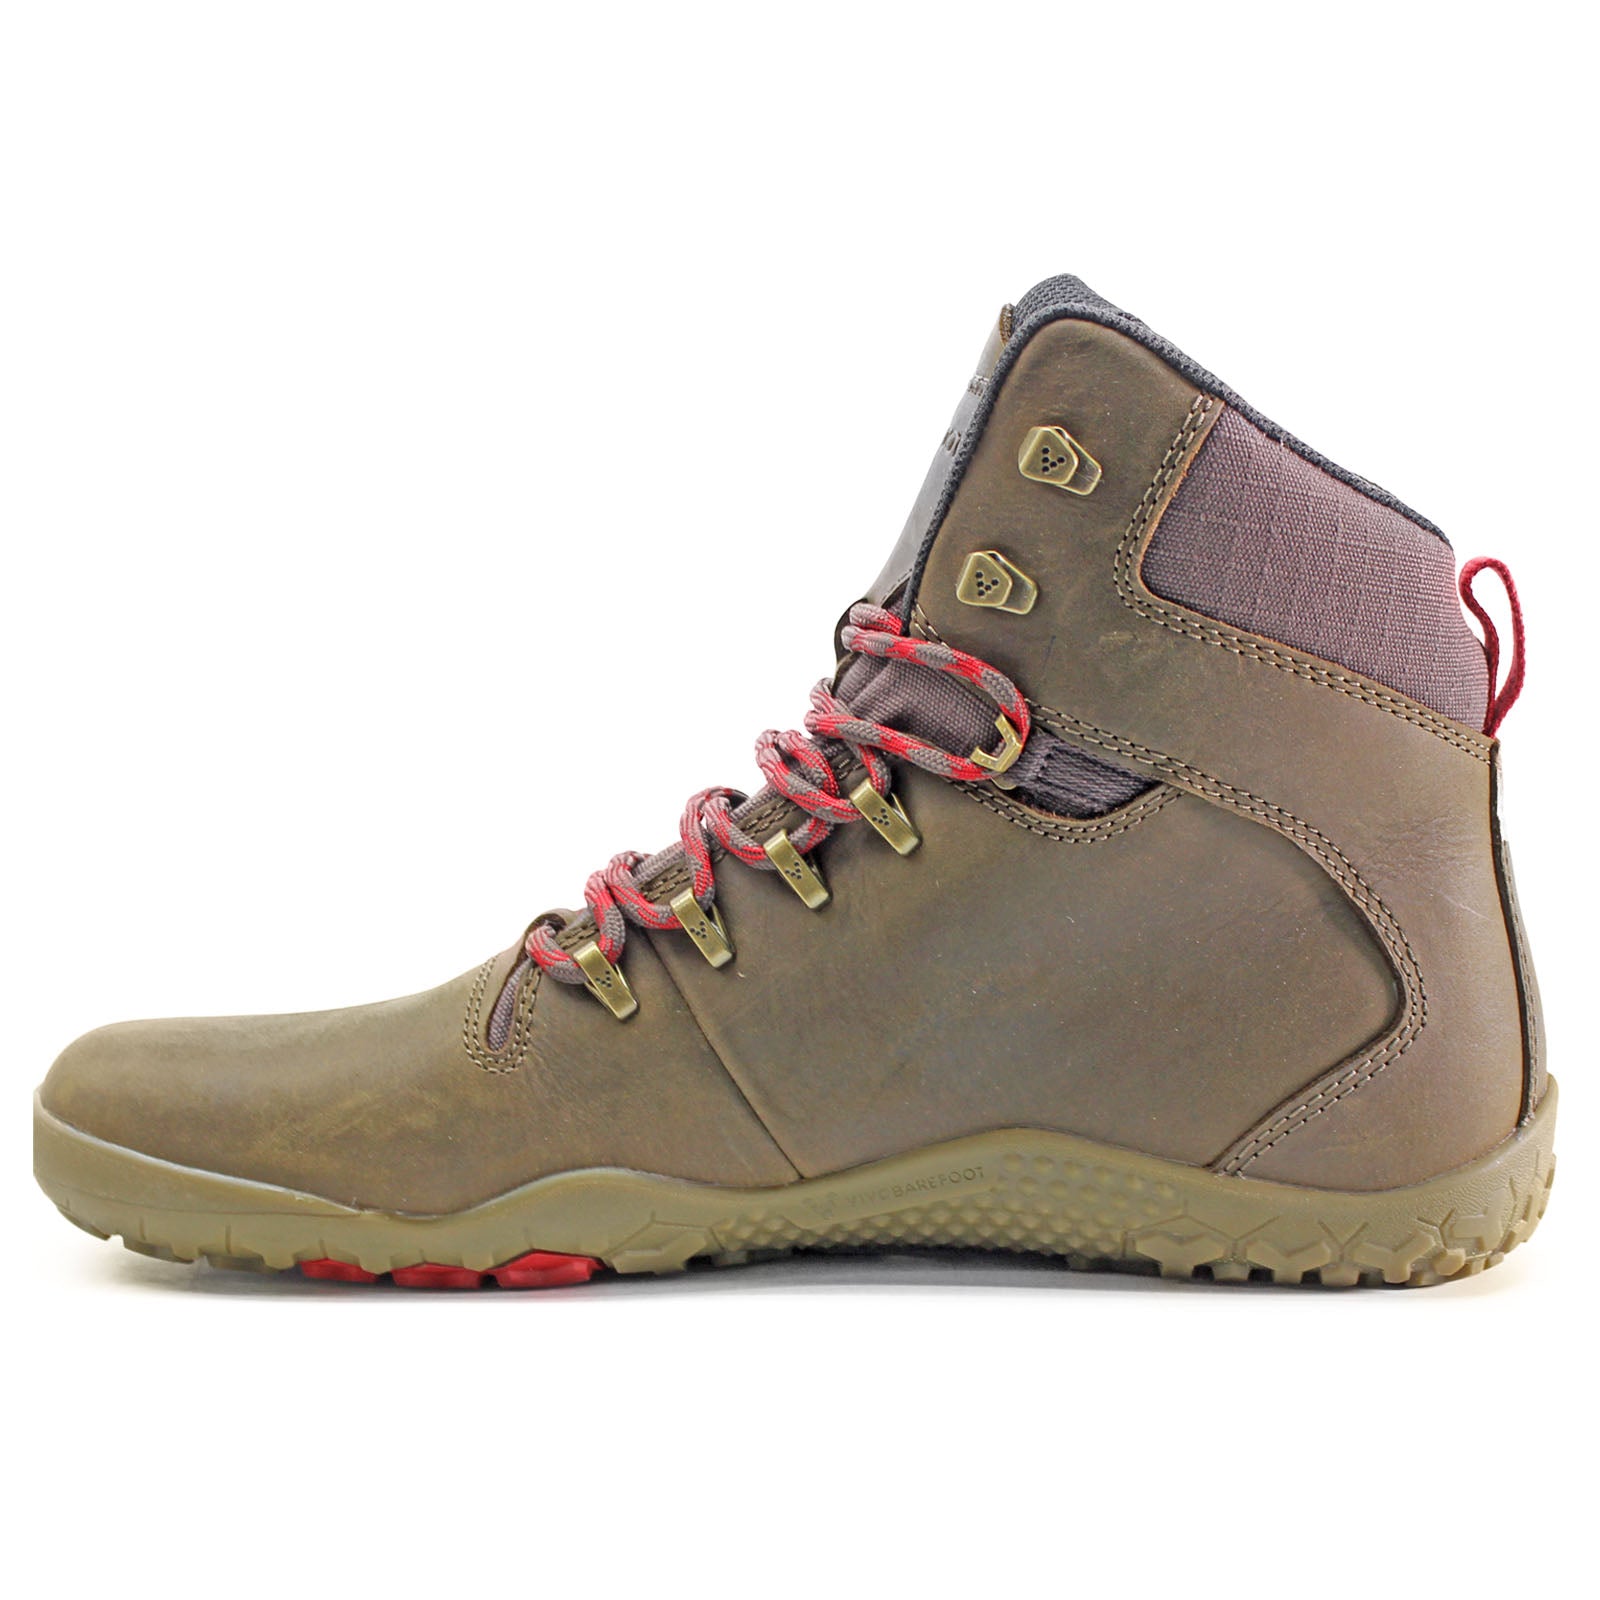 Vivobarefoot Tracker II FG Wild Hide Leather Women's Hiking Boots